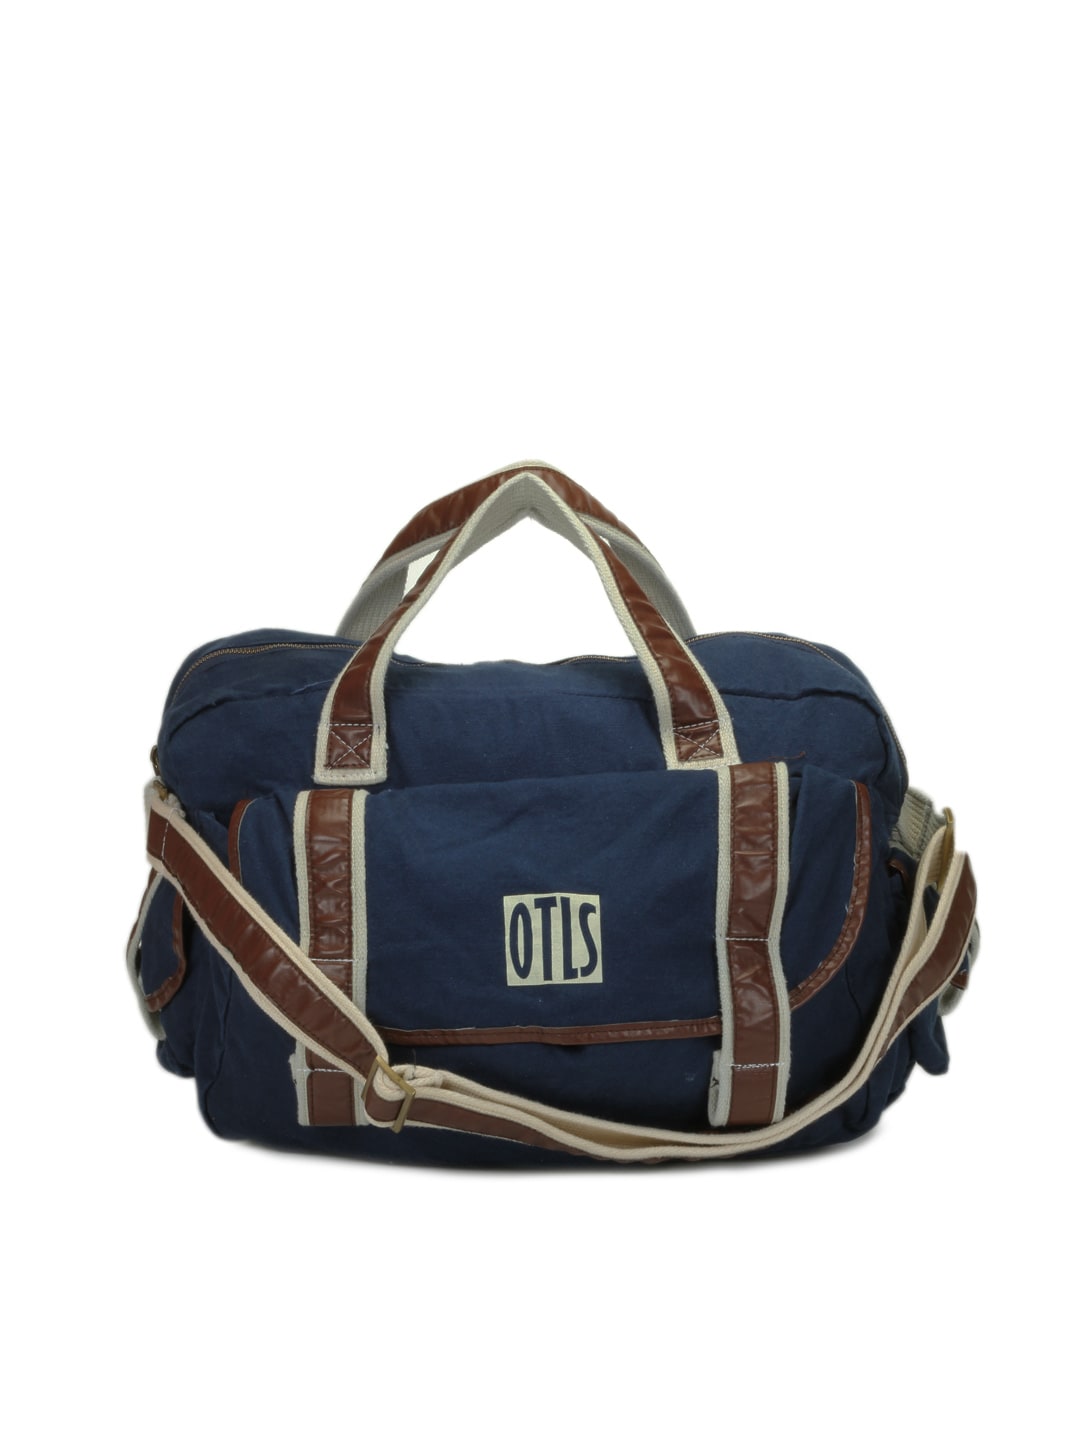 OTLS Unisex Blue Duffle Bag